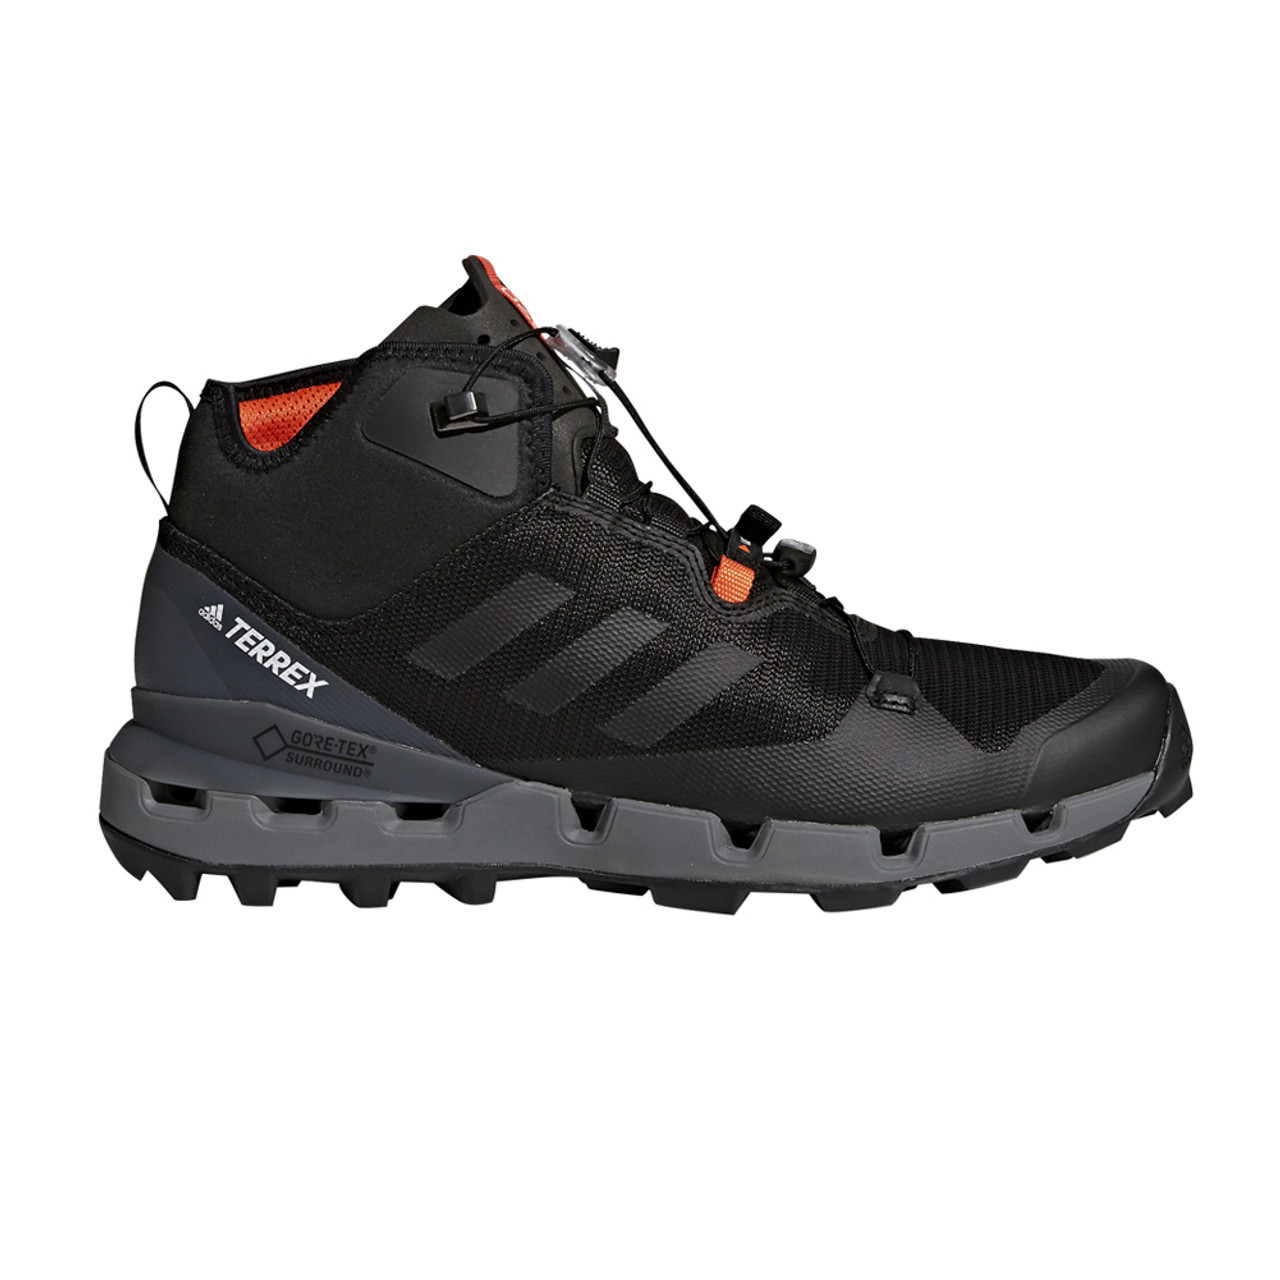 Adidas Men S Terrex Fast Mid Gtx Surround Hiking Boot Black Discount Adidas Men S Athletic Shoes More Shoolu Com Shoolu Com